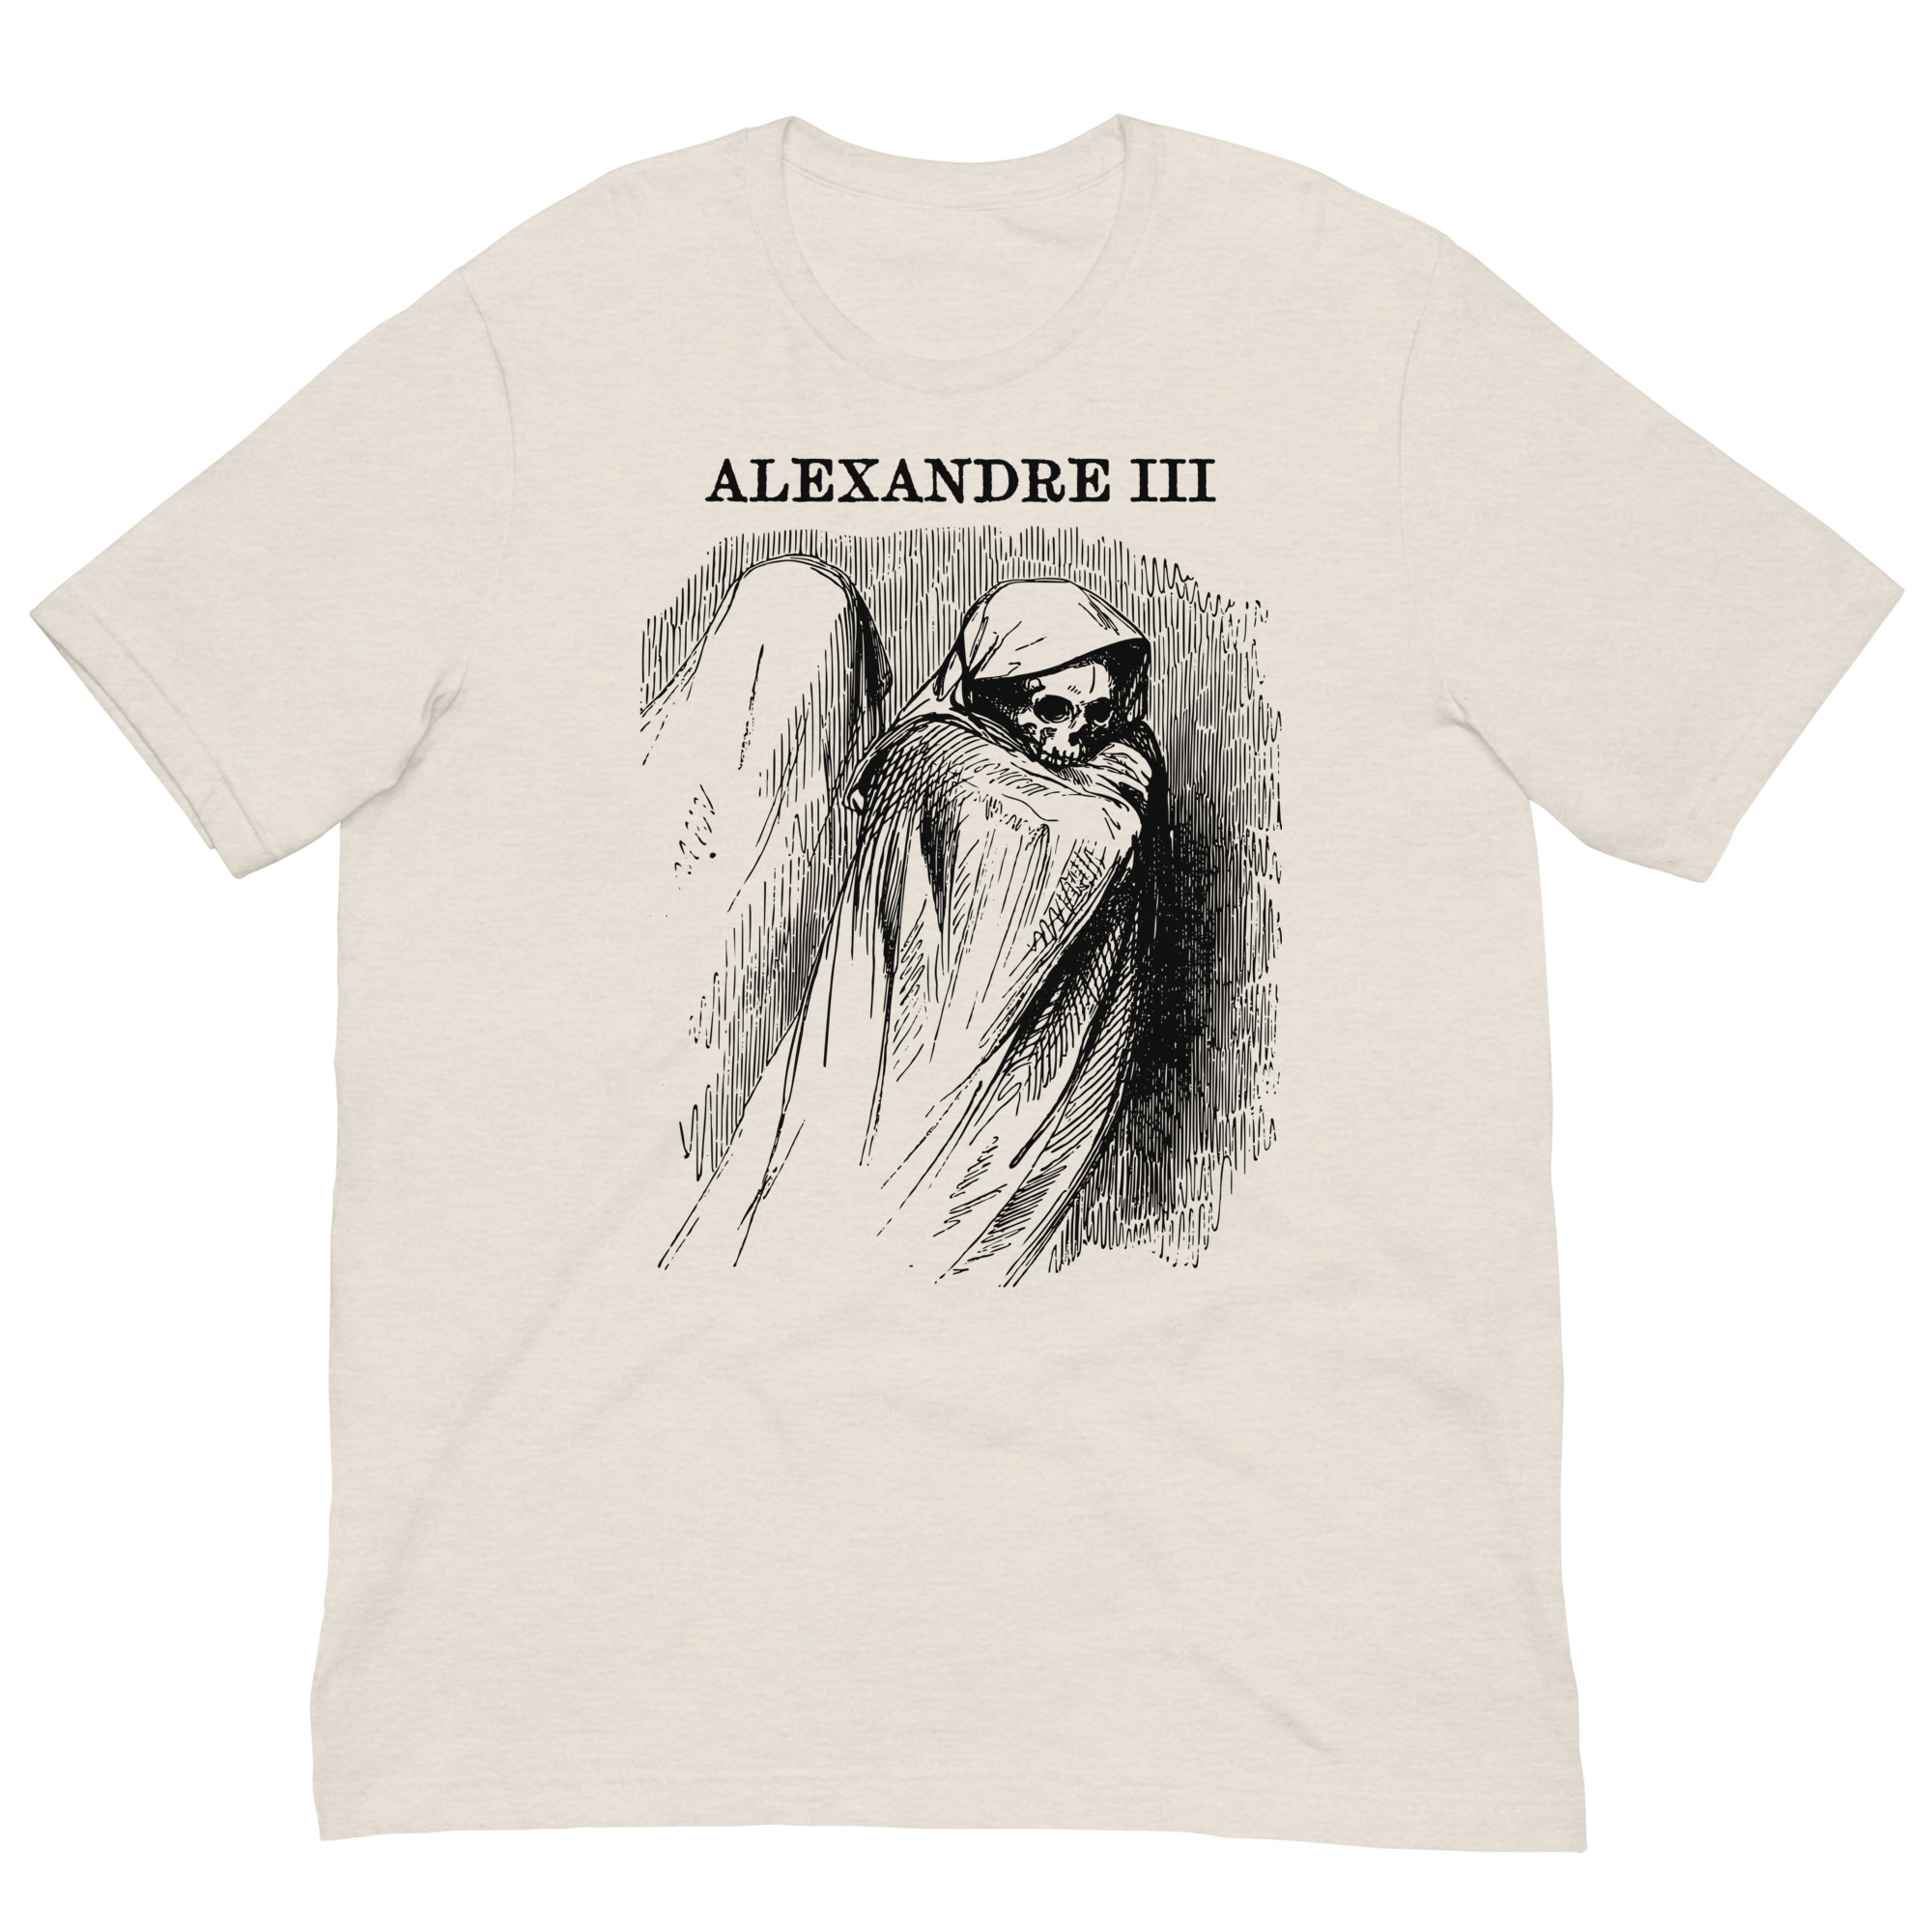 Featured image for “Alexandre III, Louis Le Breton, 1818 - Unisex Bella + Canvas t-shirt”